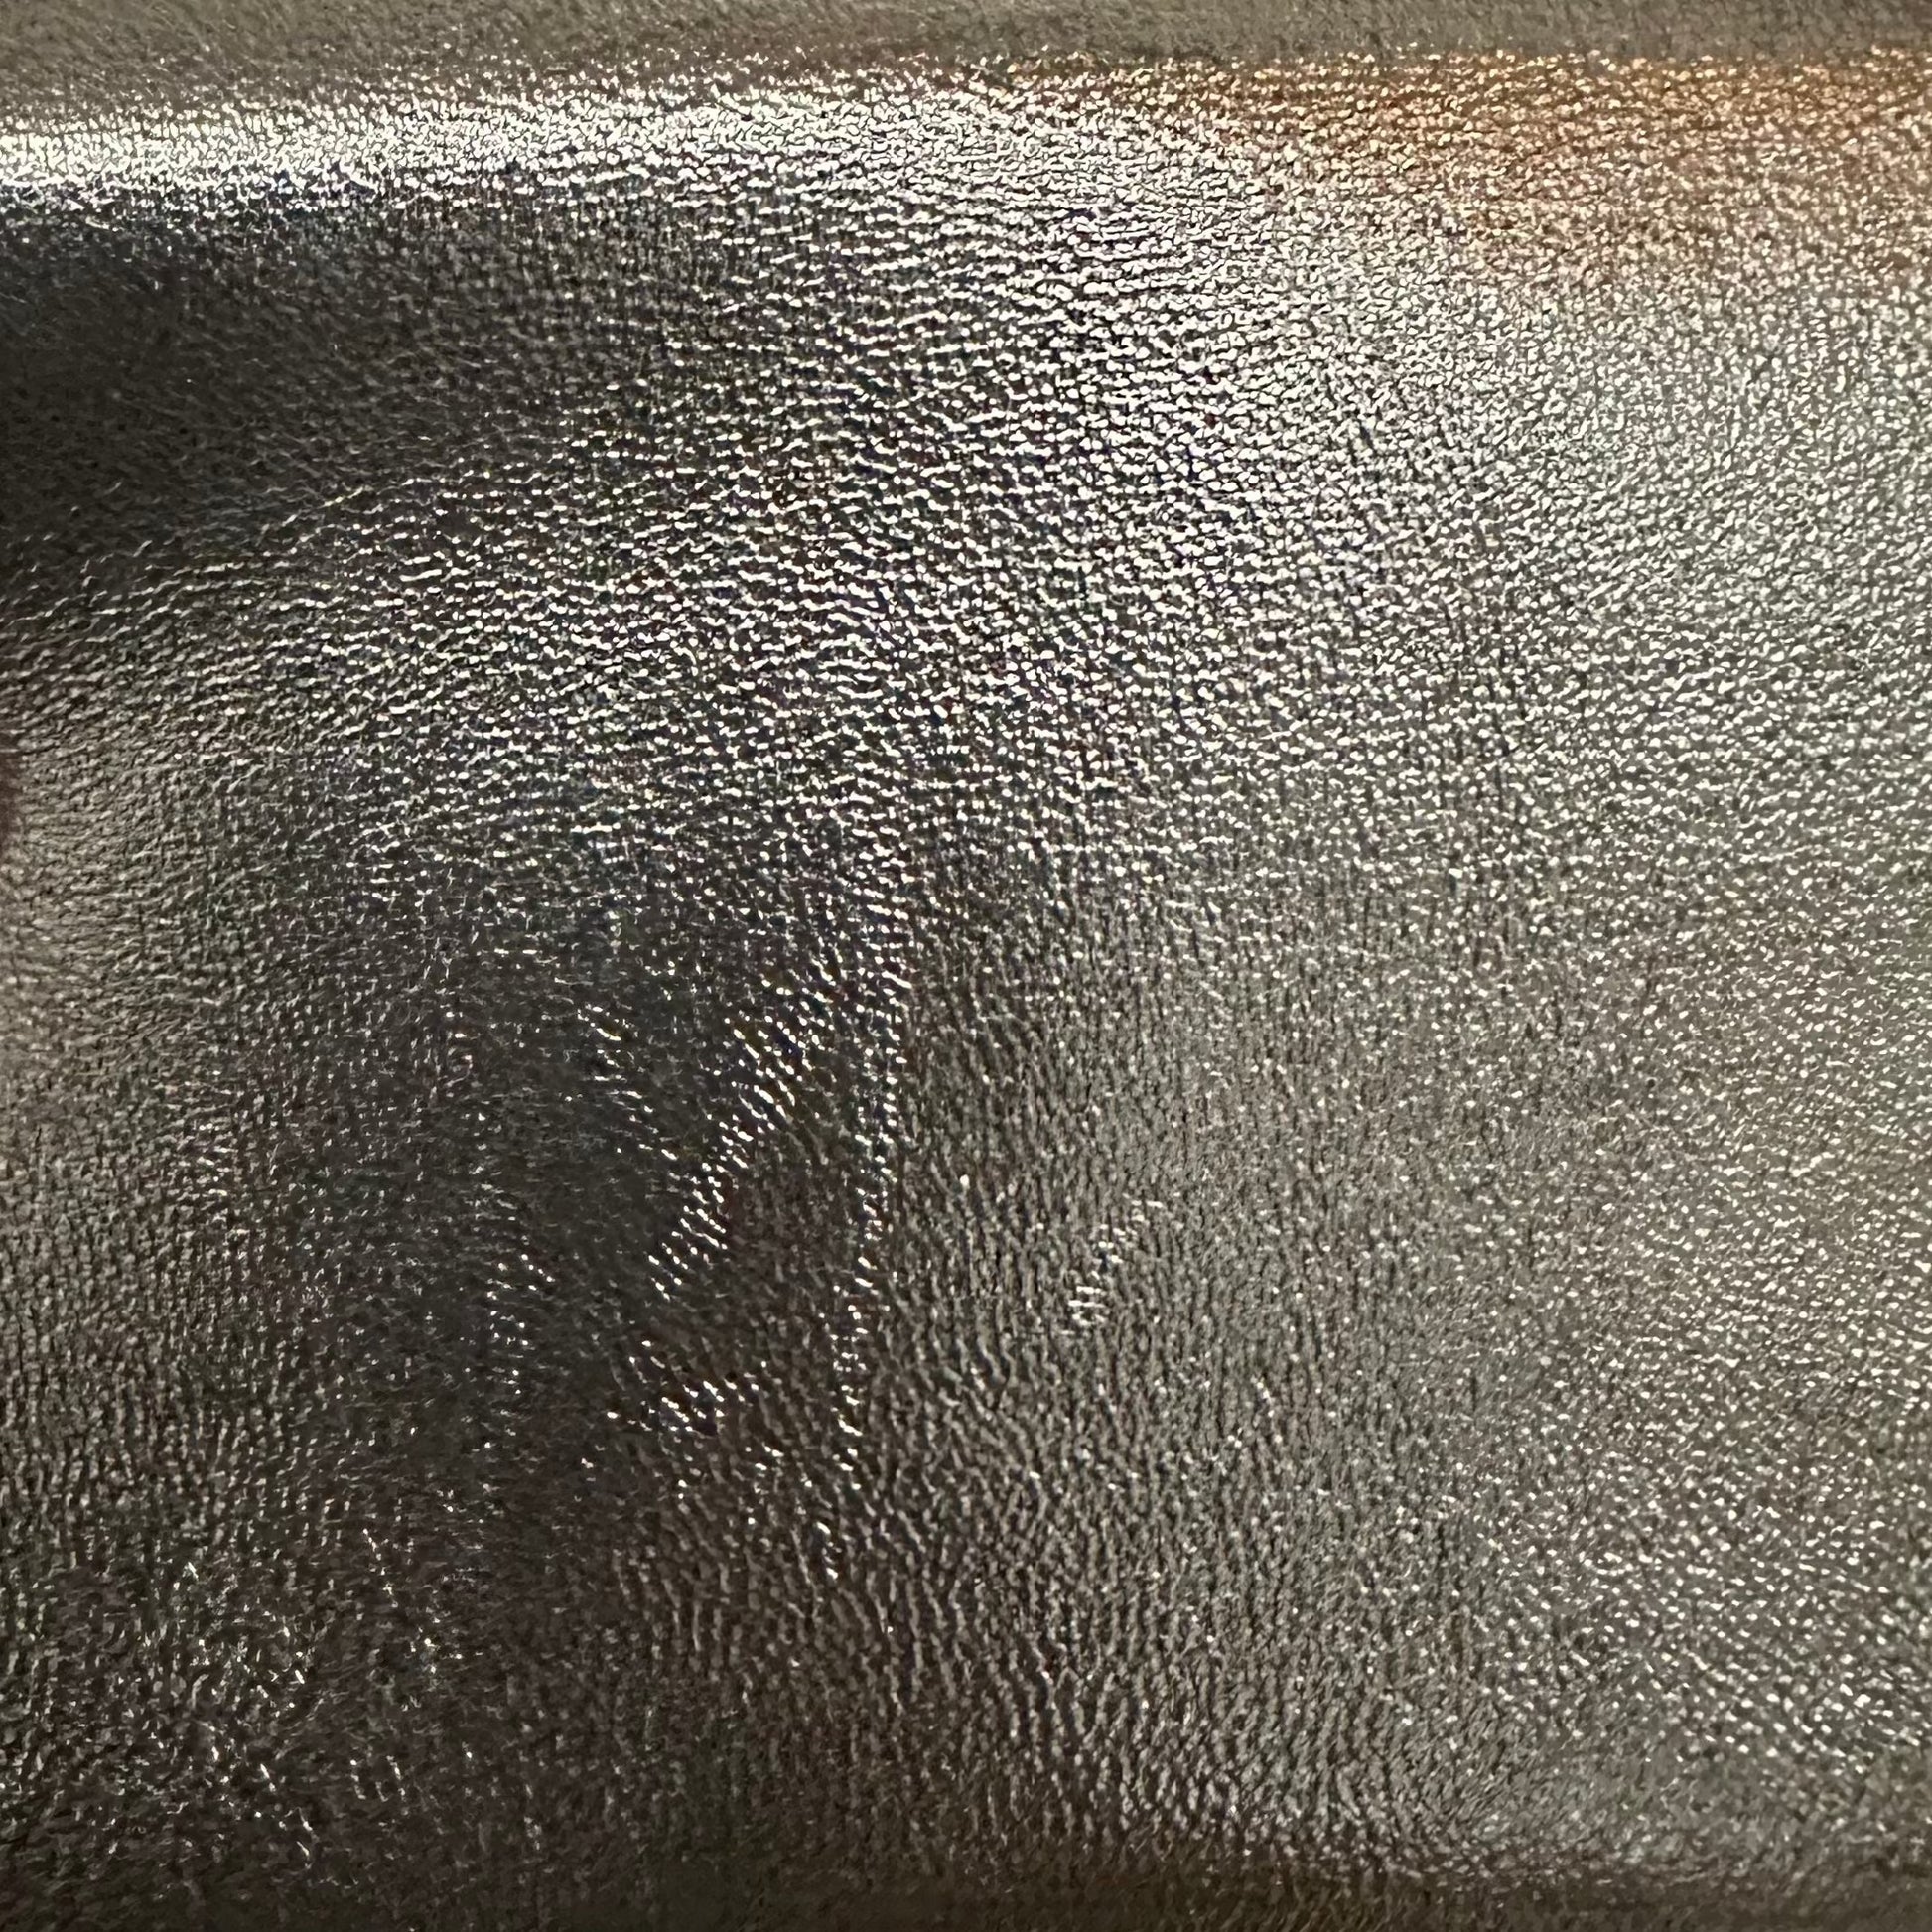 Scuff marks on inside flap